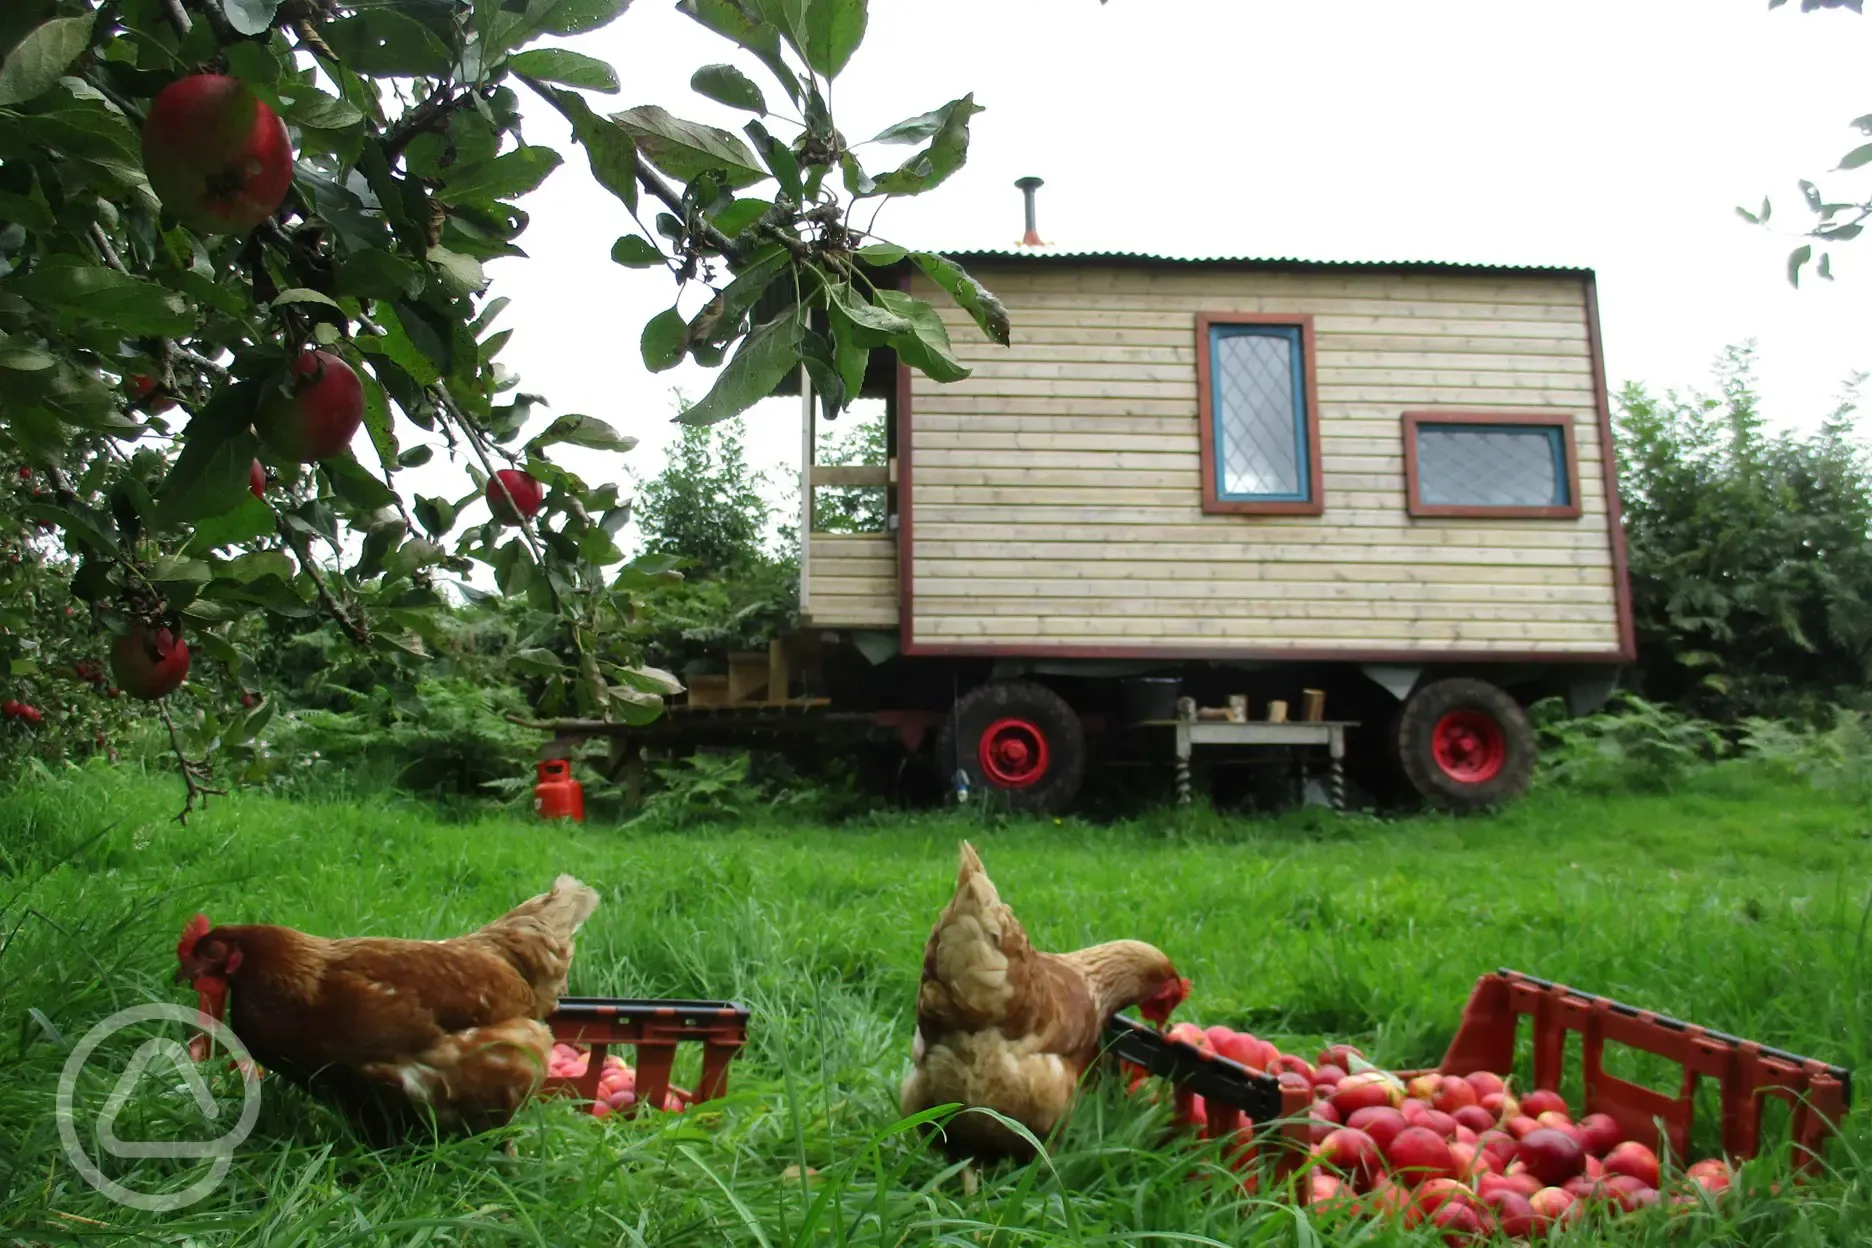 Orchard wagon